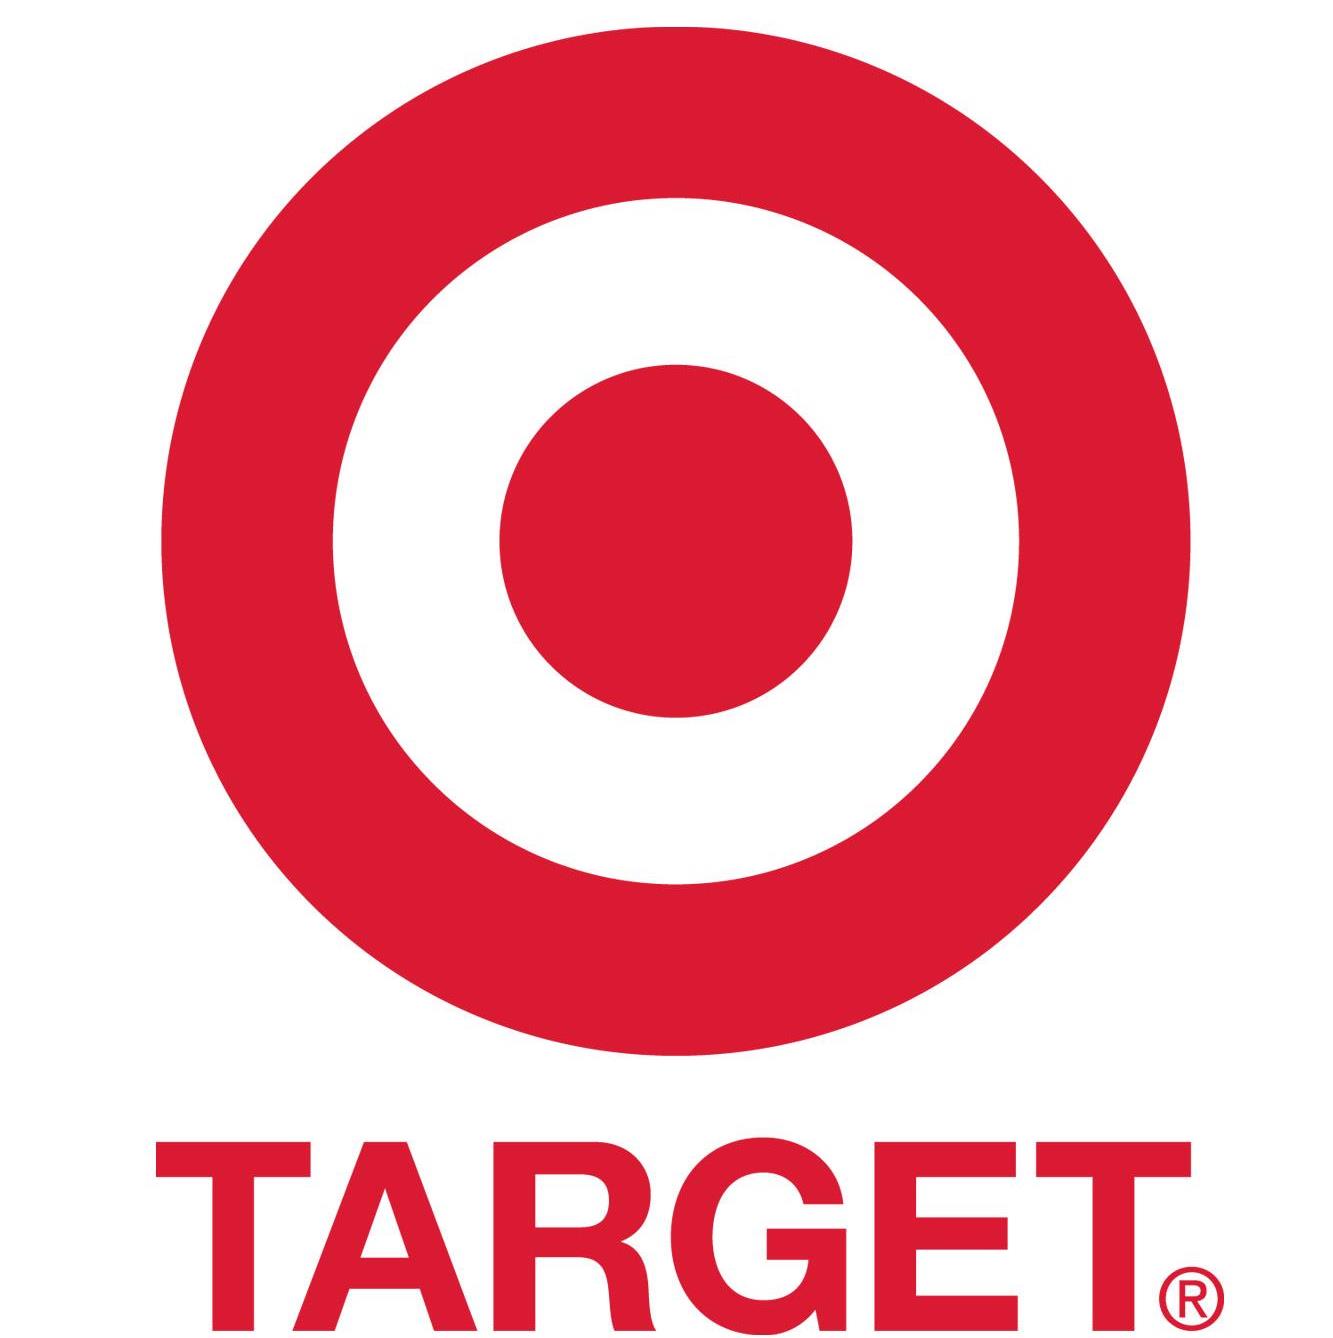 target-logo-high-resolution.jpg